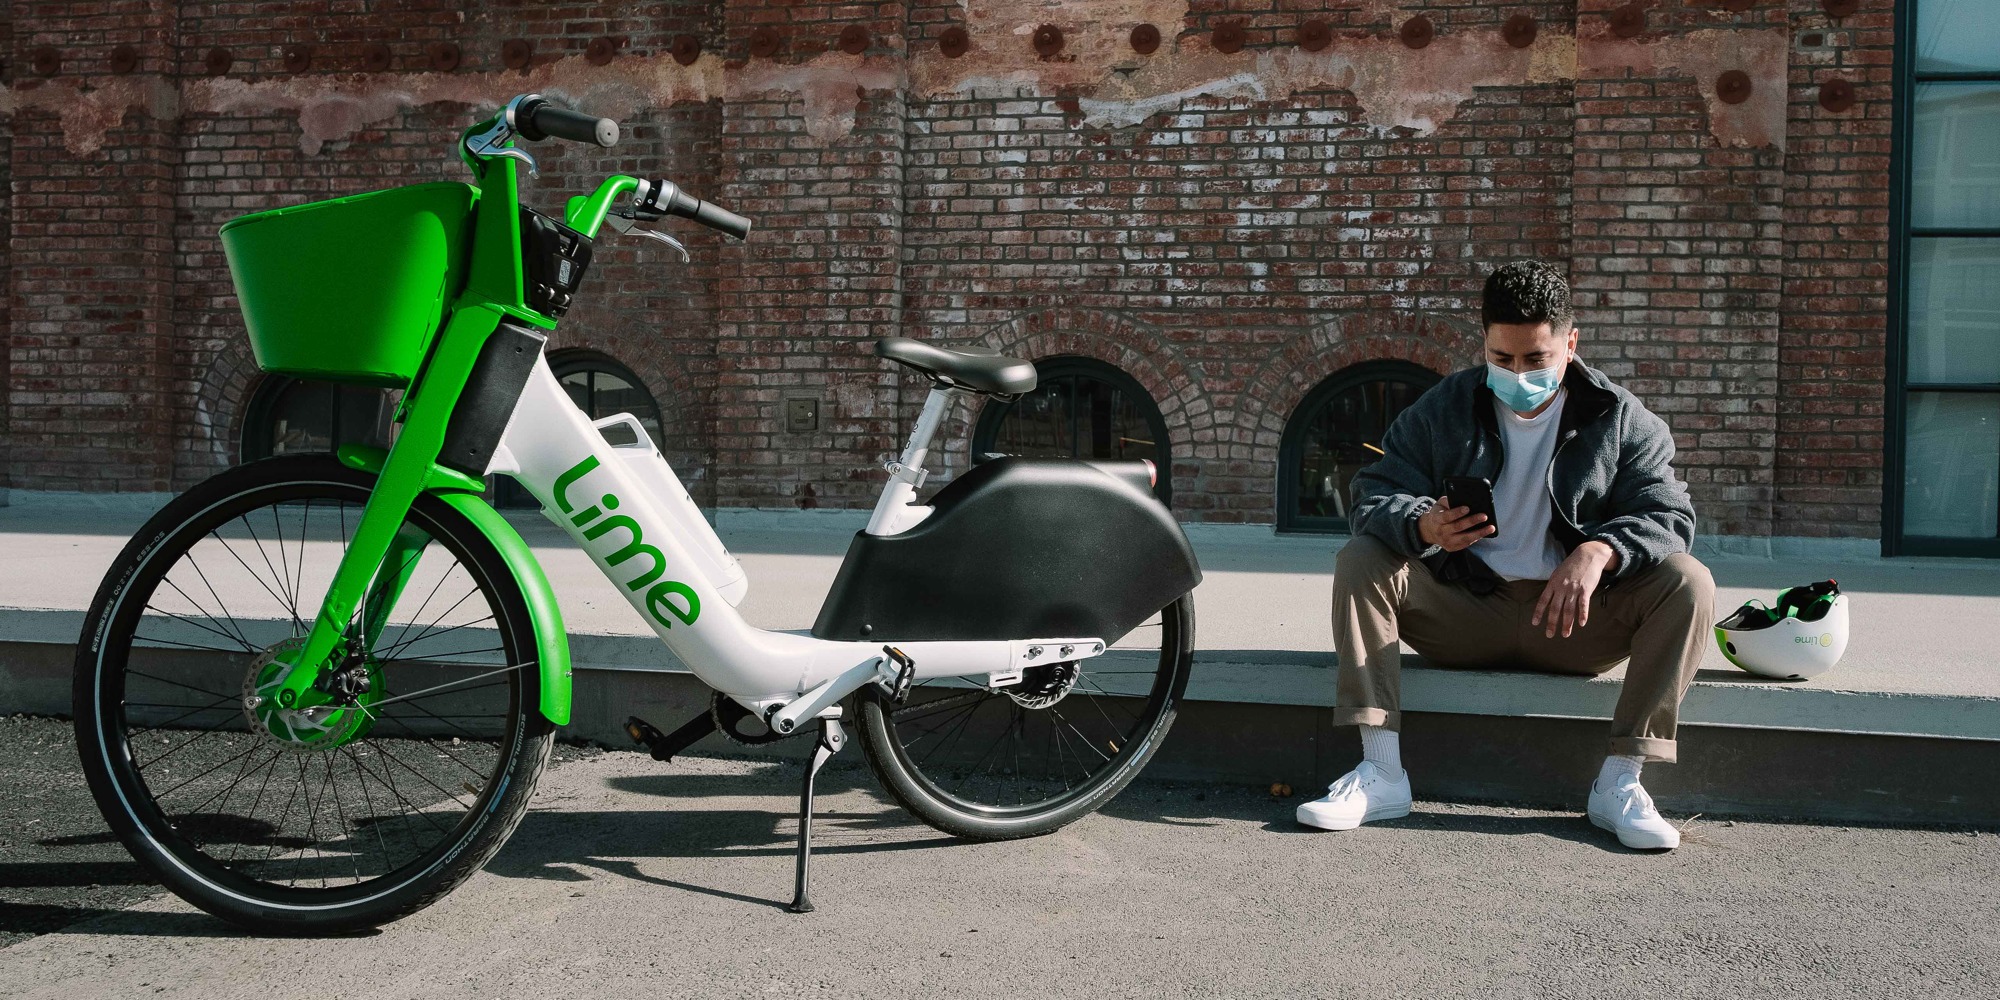 NDOT and E-Bike Companies Launch City’s First Dockless E-Bike Pilot Program